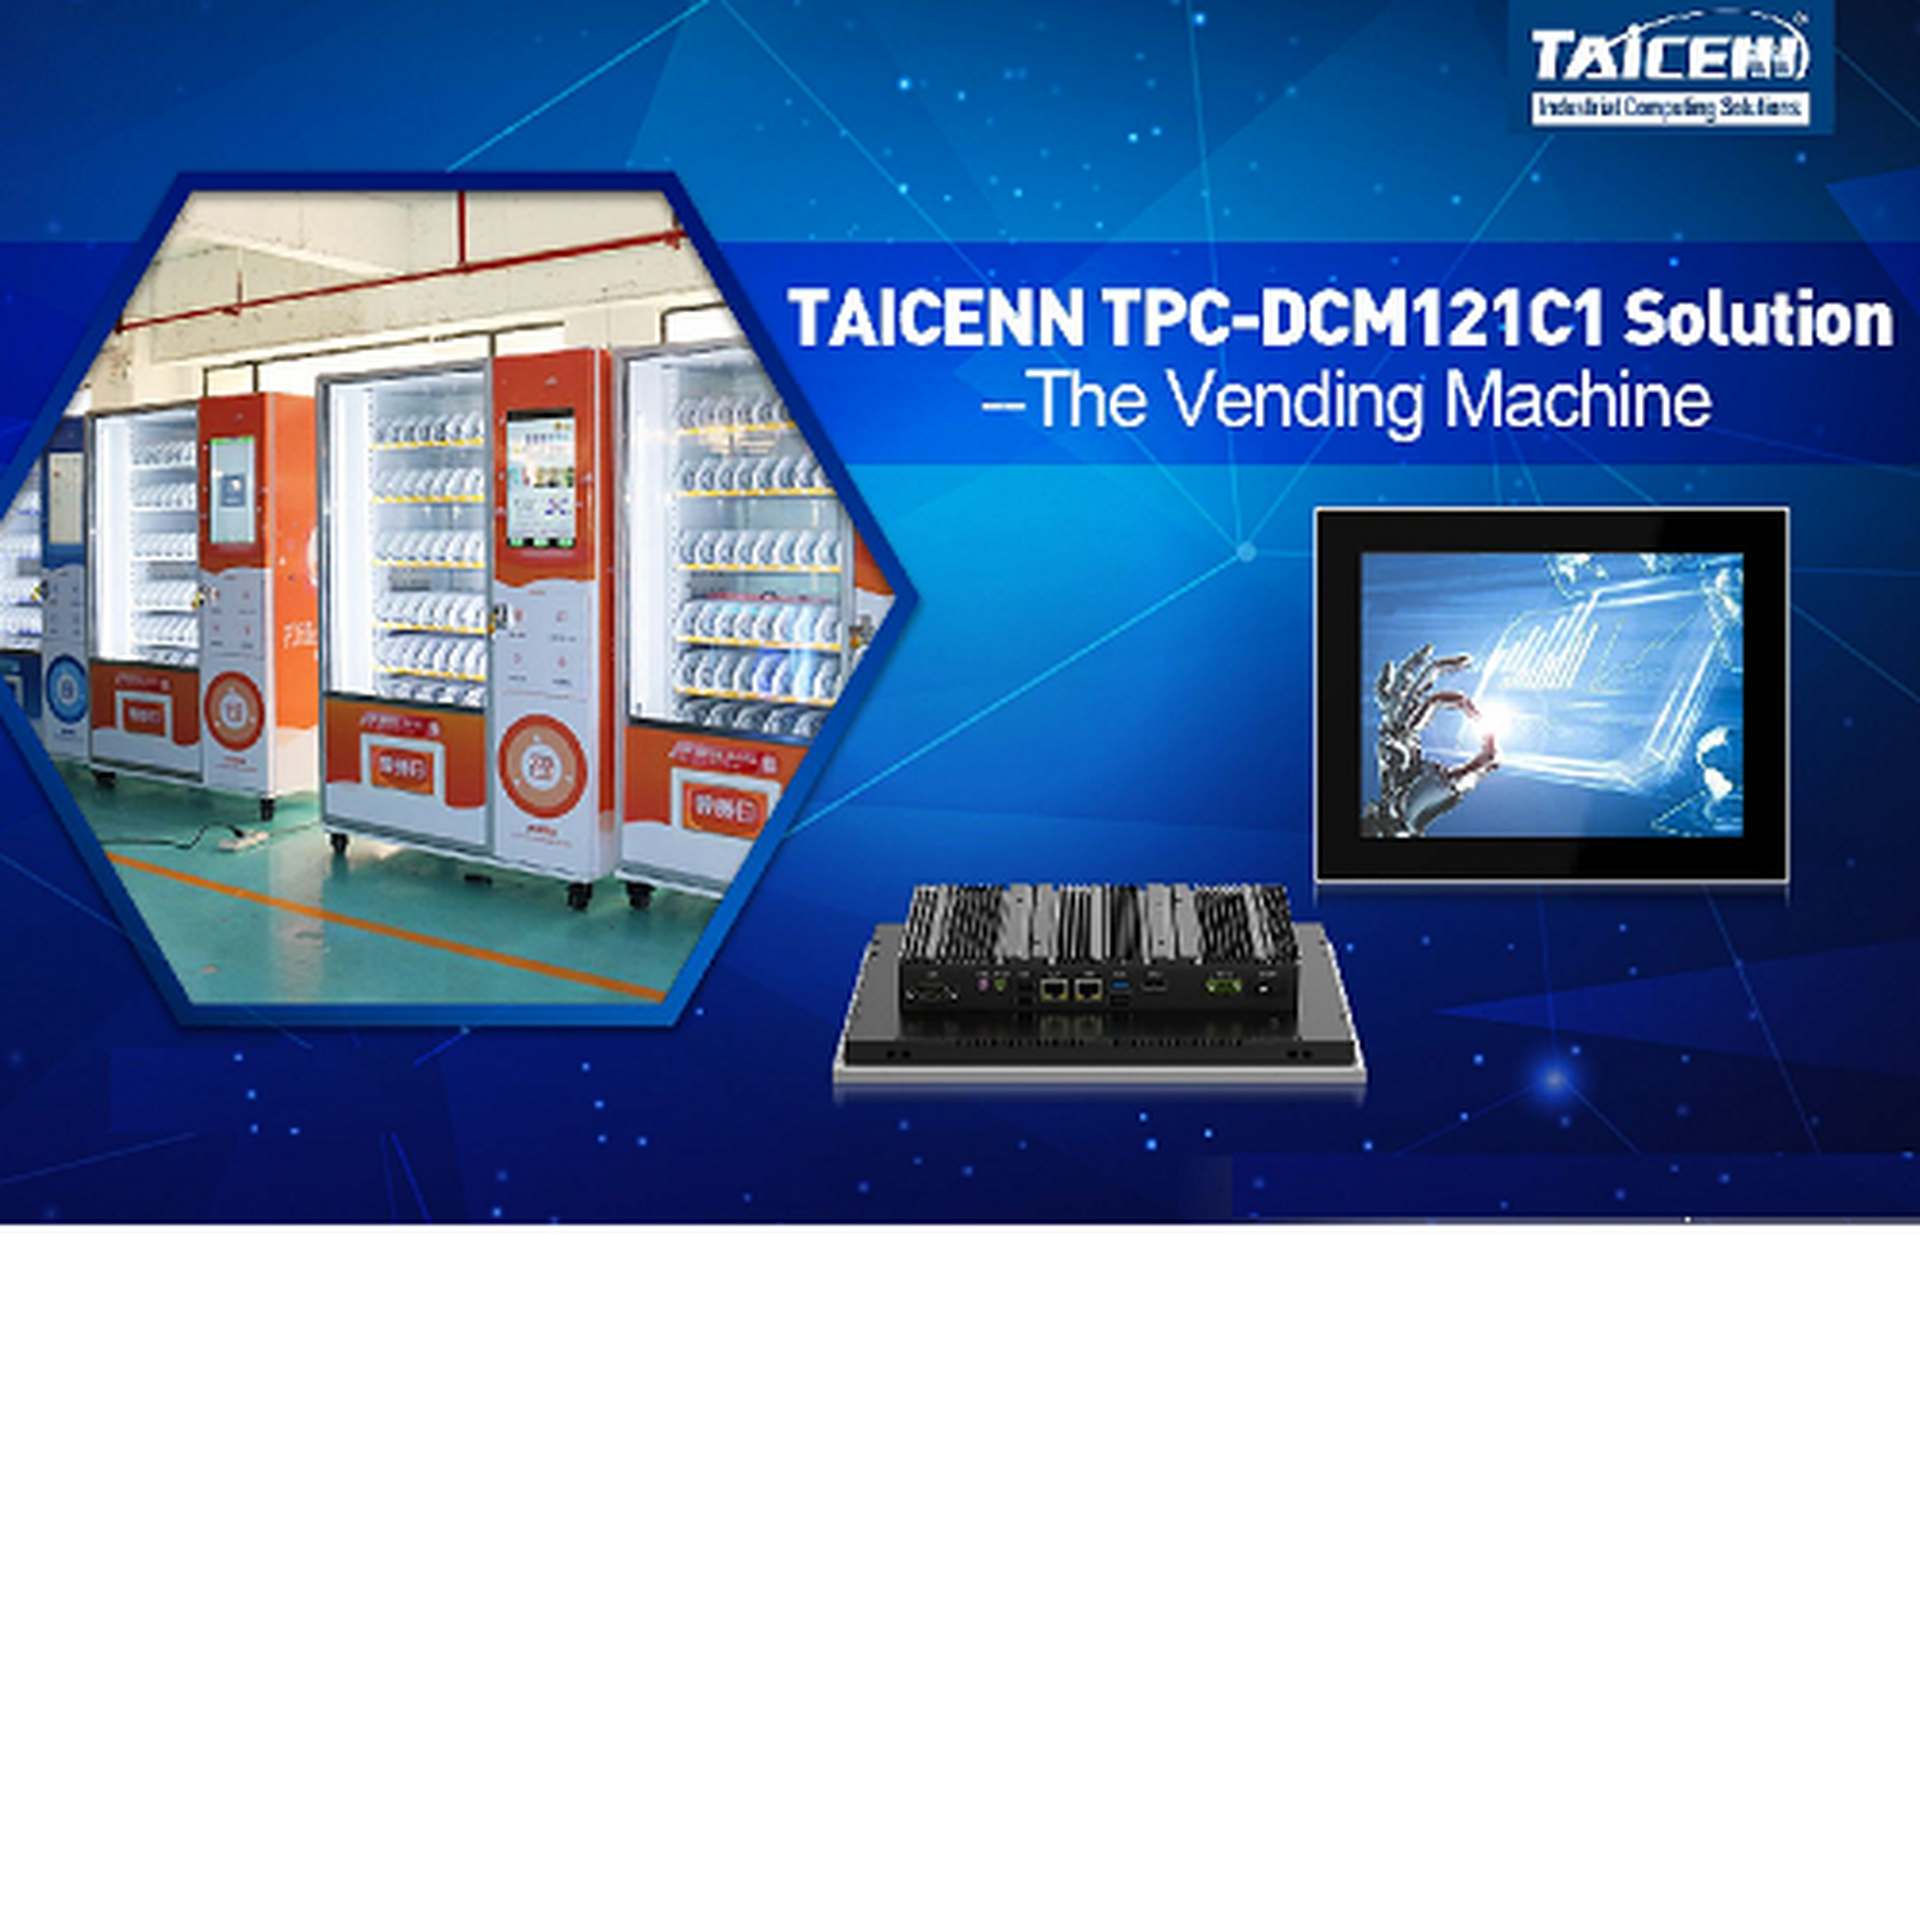 Taicenn TPC DCM121 C1